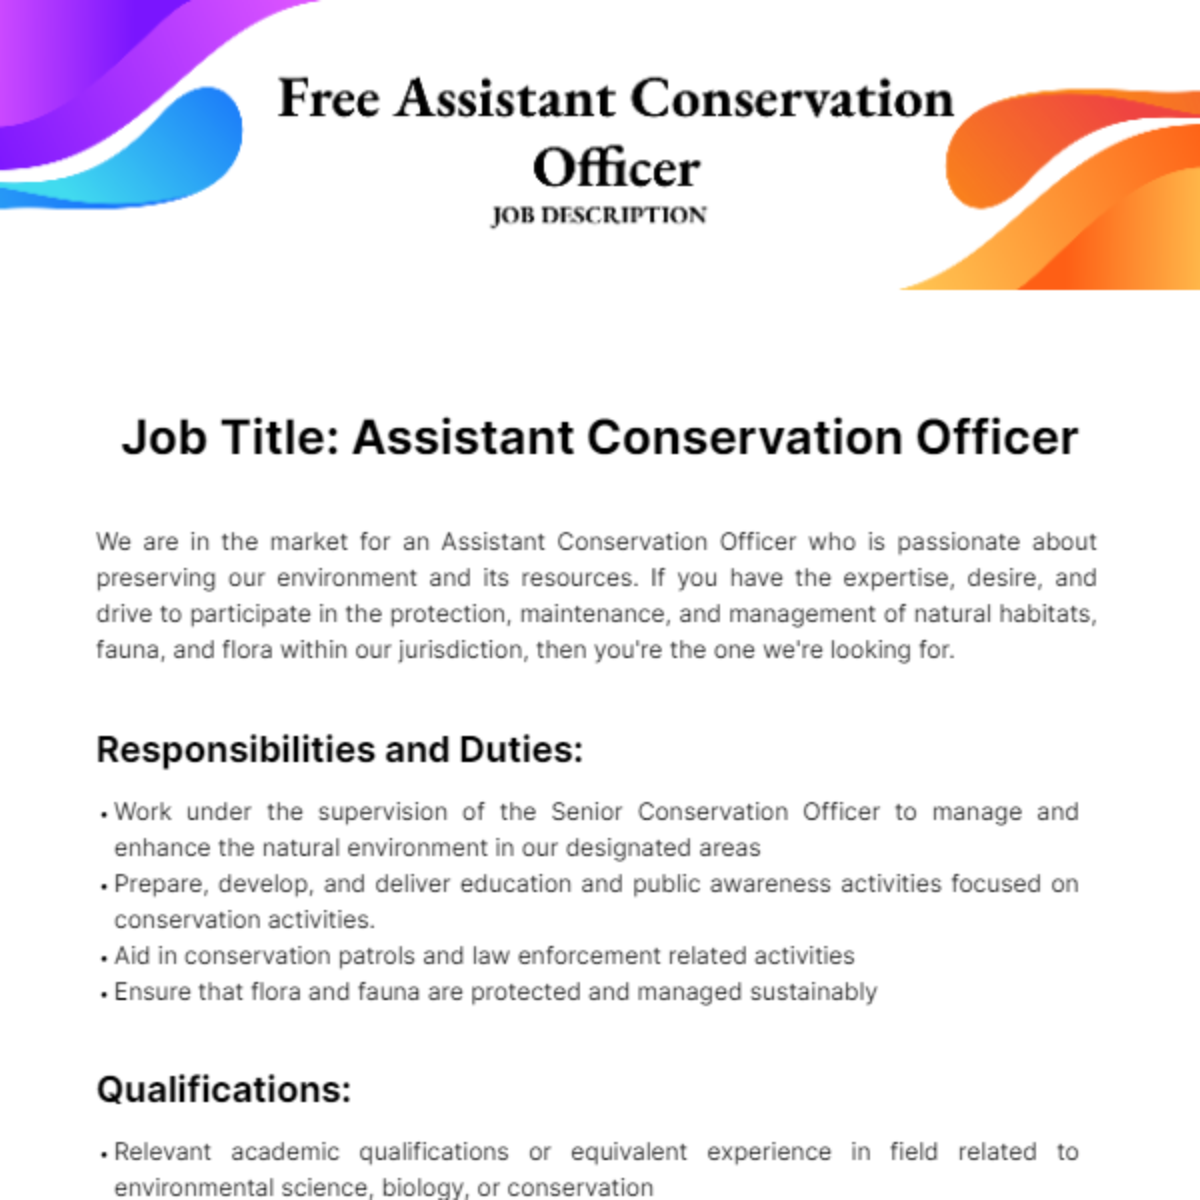 Free Assistant Conservation Officer Job Description Template